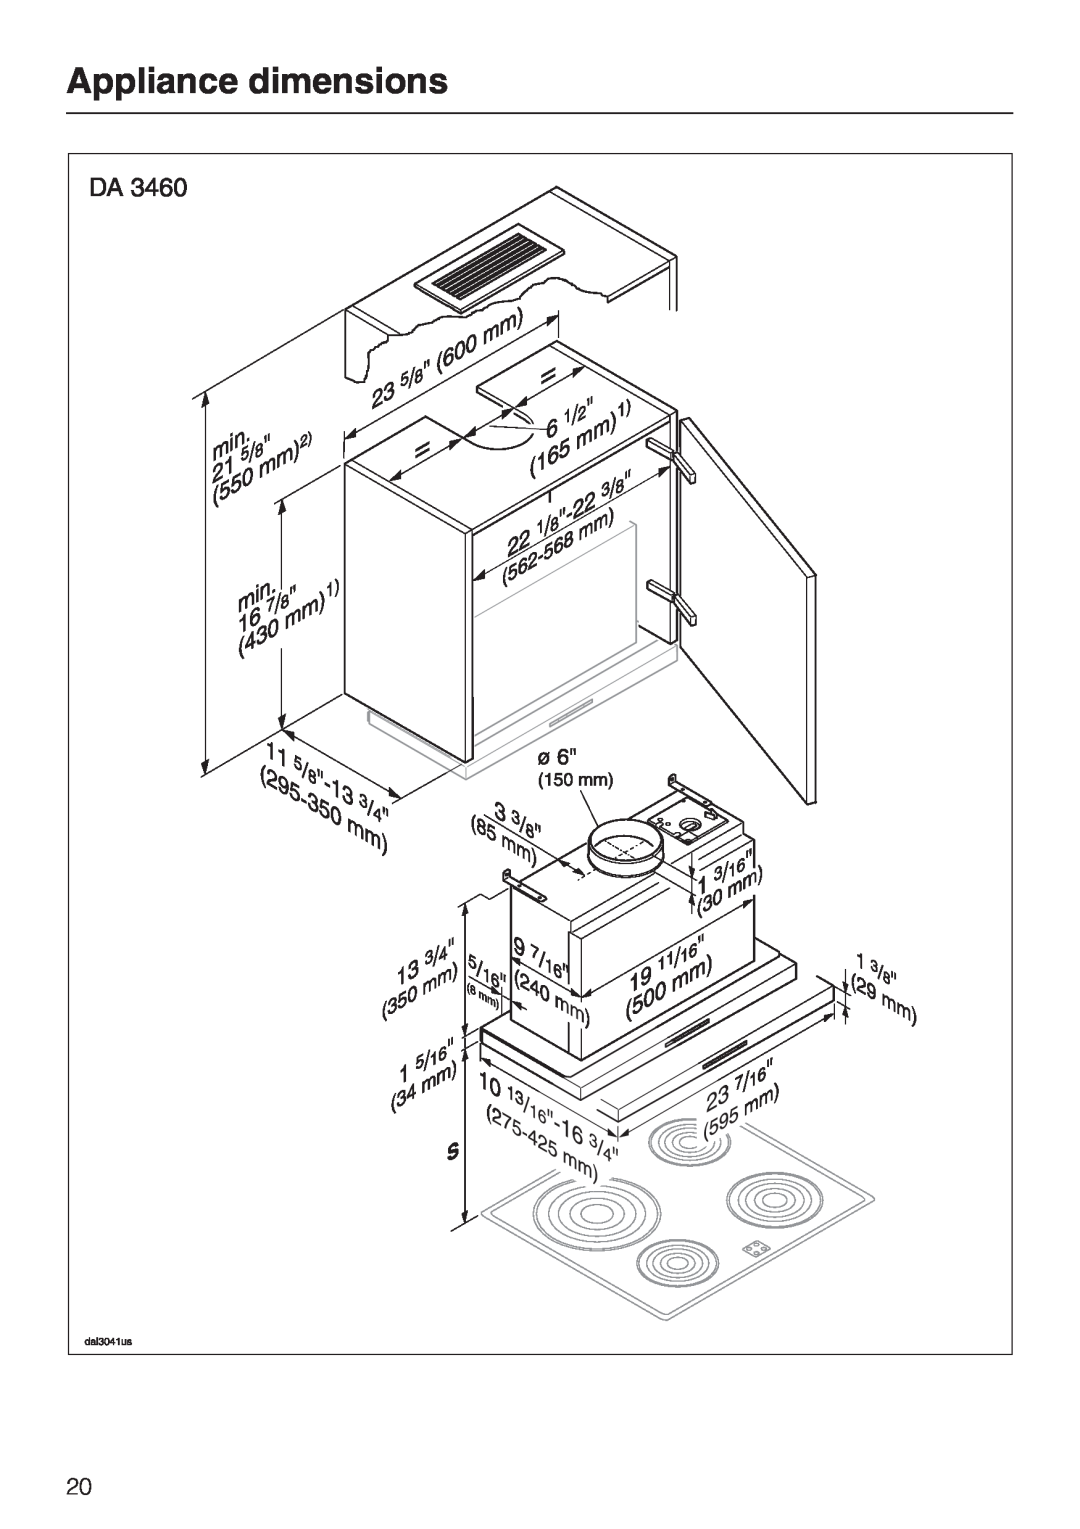 Miele DA 3490, DA 3460, DA 3480 installation instructions Appliance dimensions 